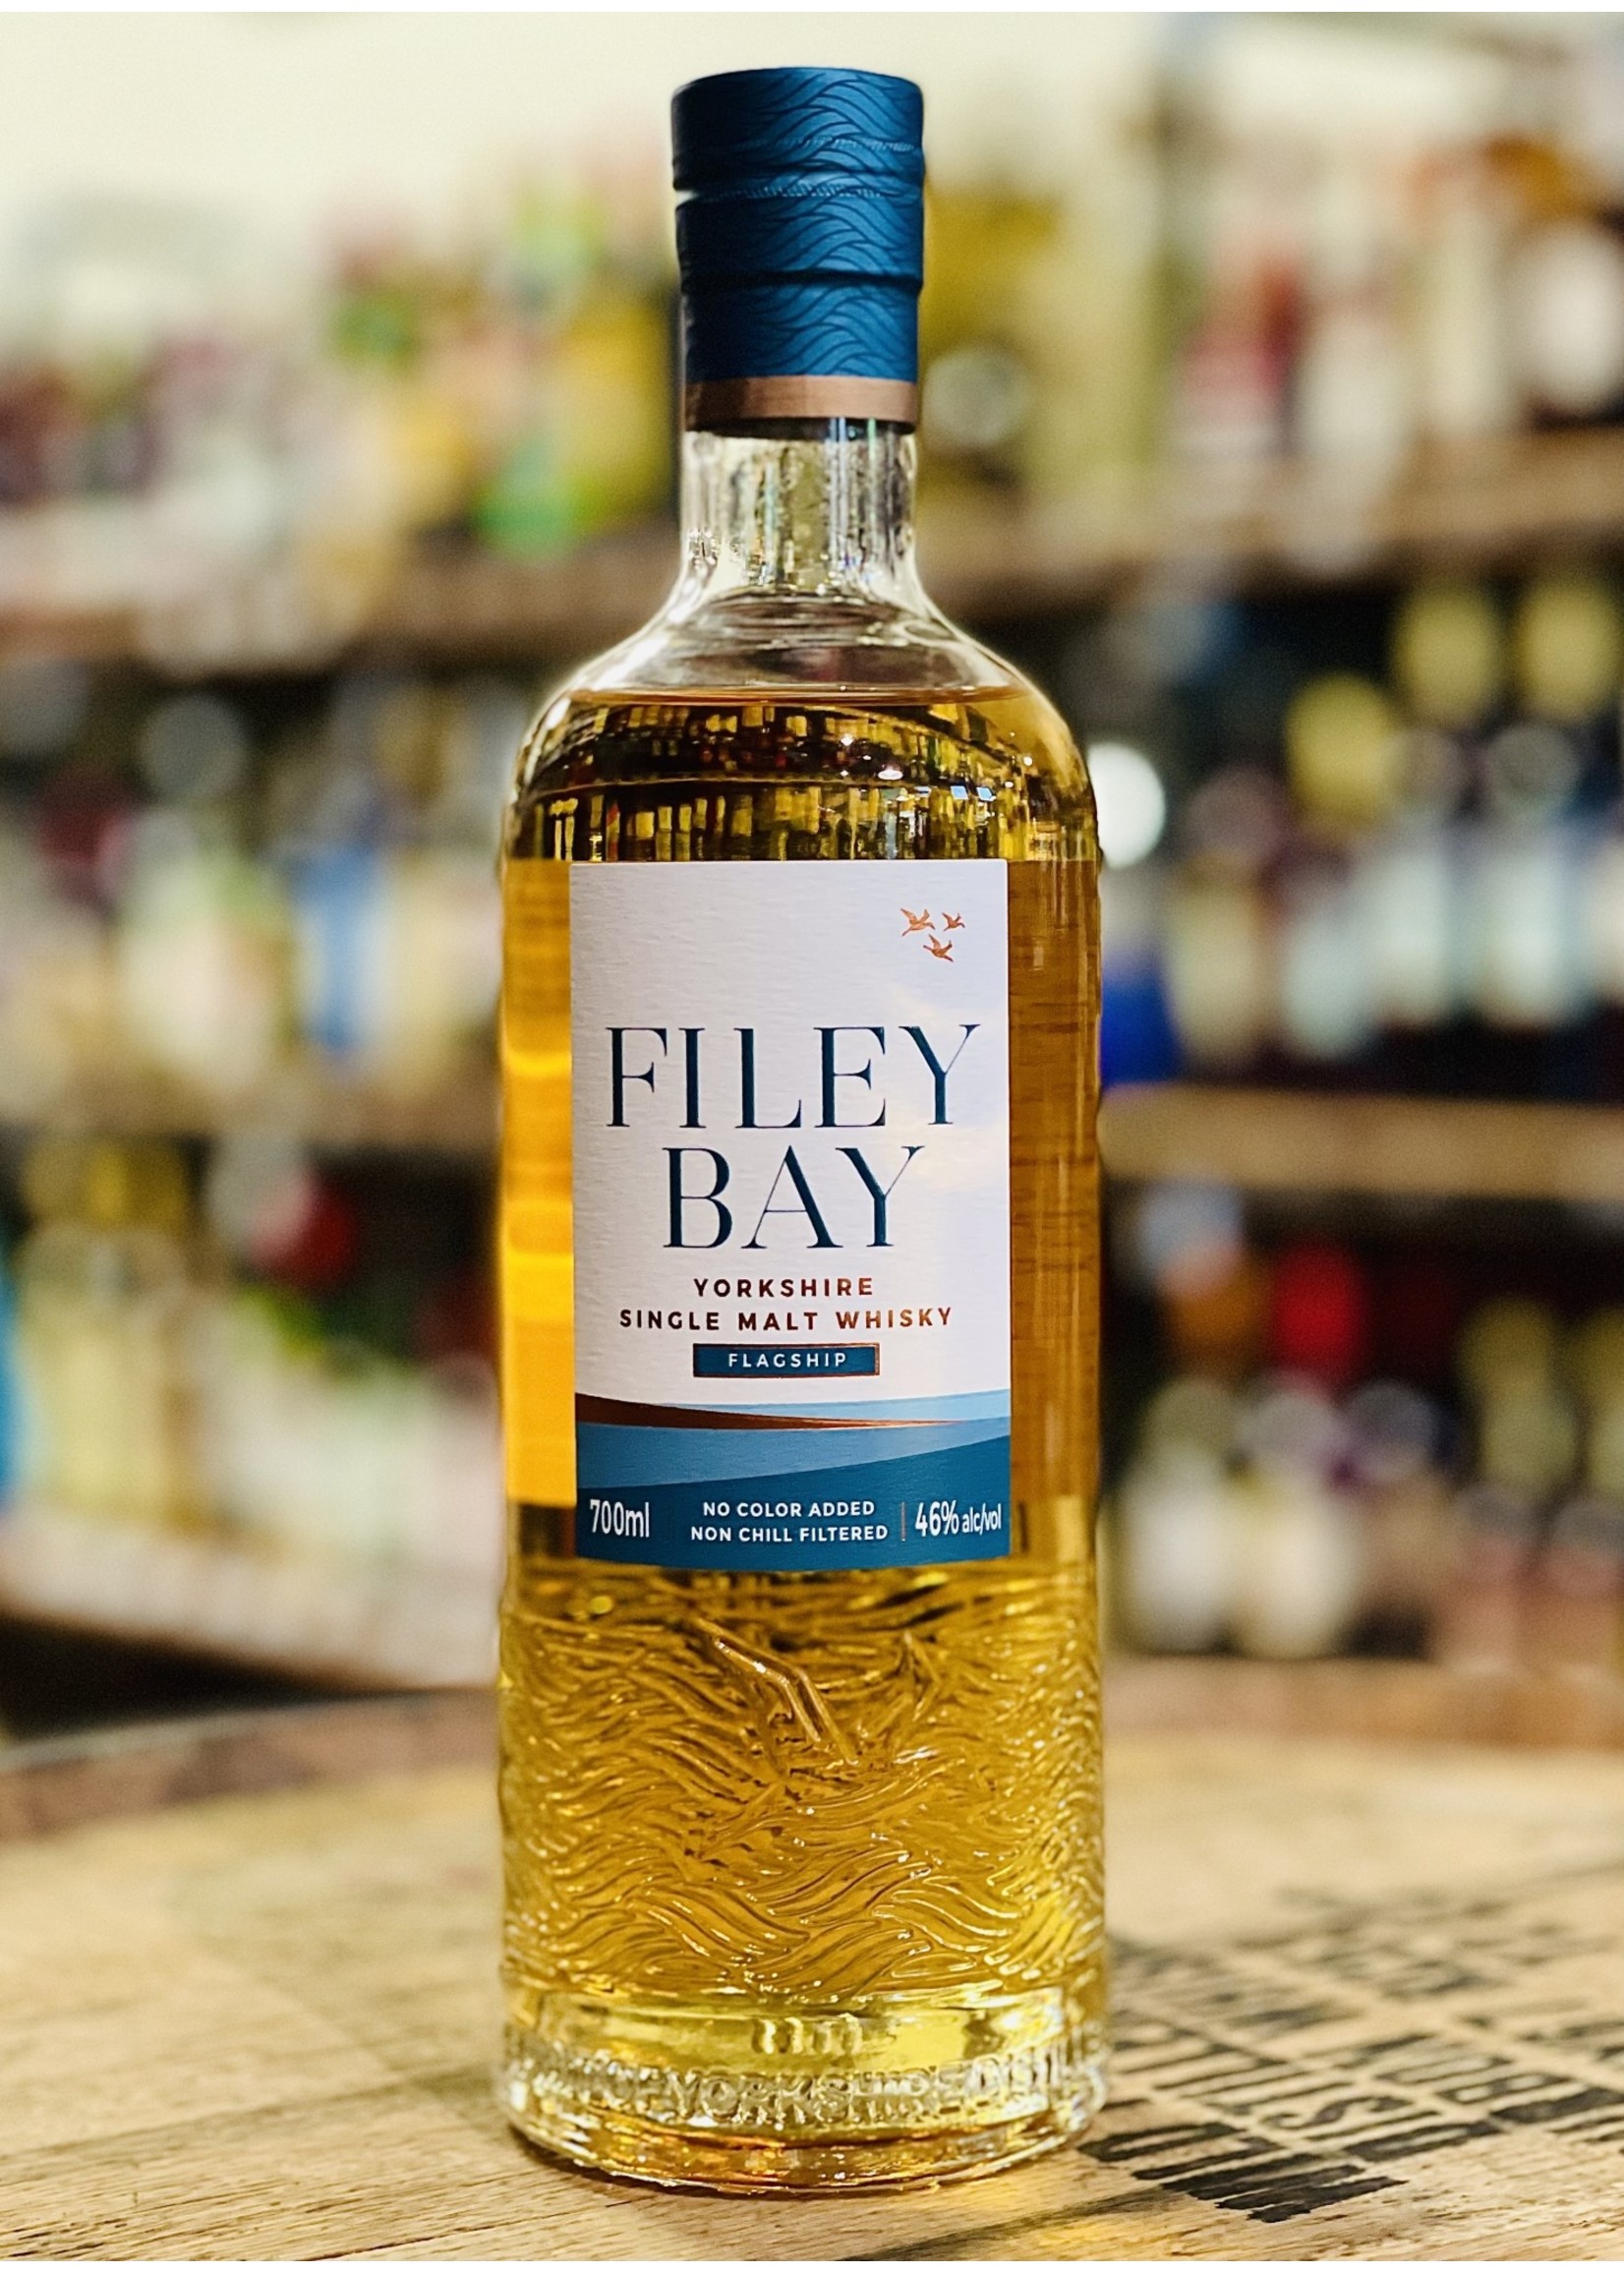 Filey Bay Filey Bay / Spirit of Yorkshire Flagship Single Malt Whisky 46% abv / 700mL